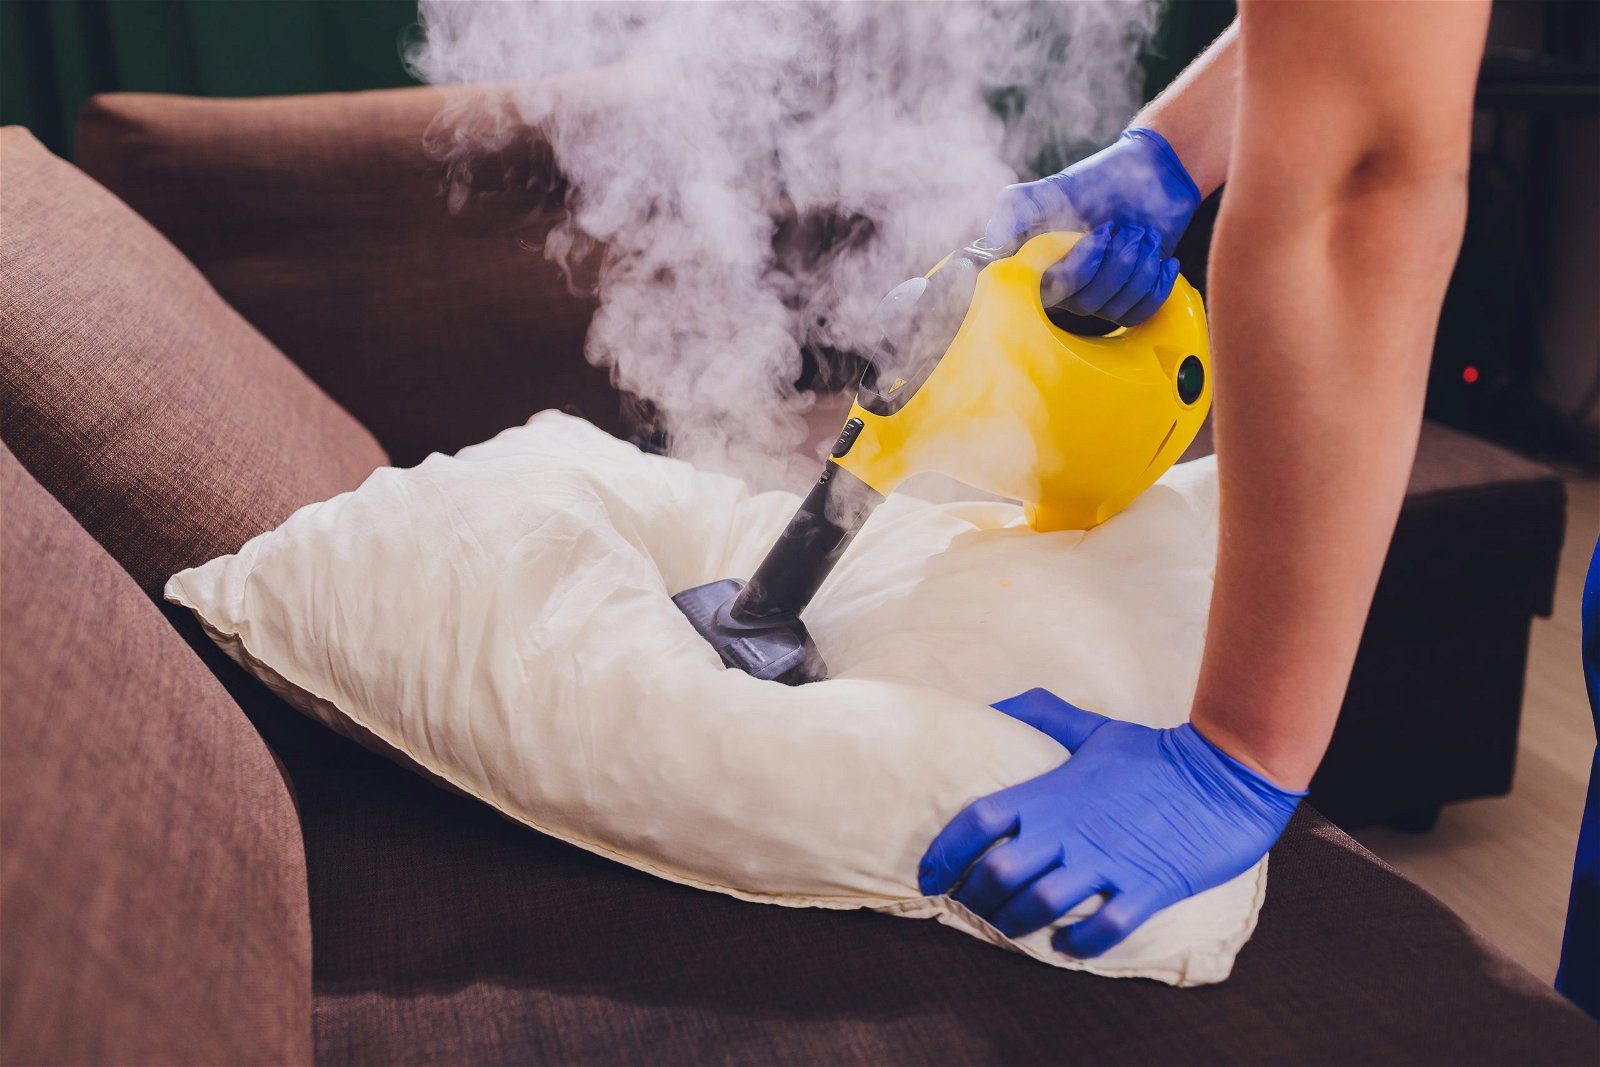 Igiene e pulizia ai massimi livelli col pulitore a vapore